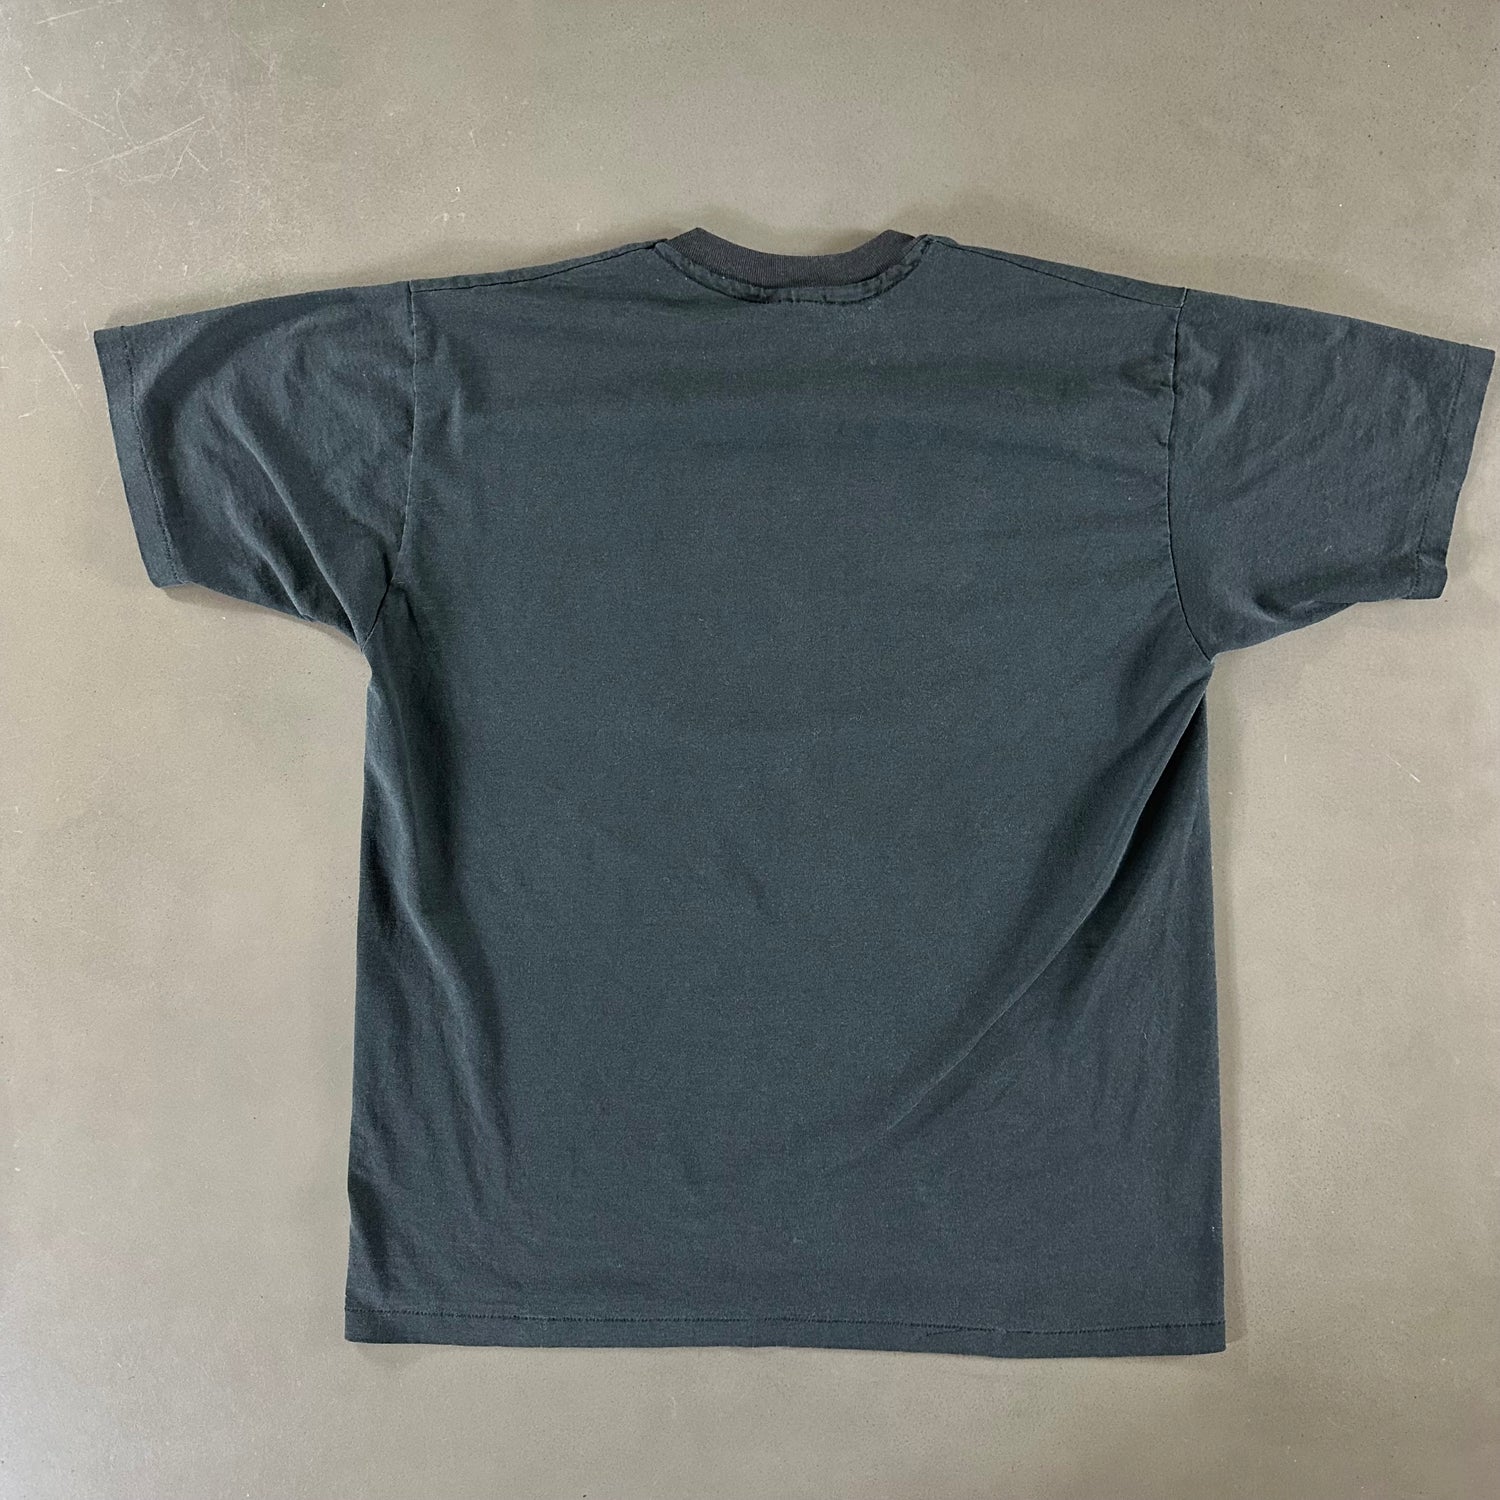 Vintage 1987 St. Thomas T-shirt size XL